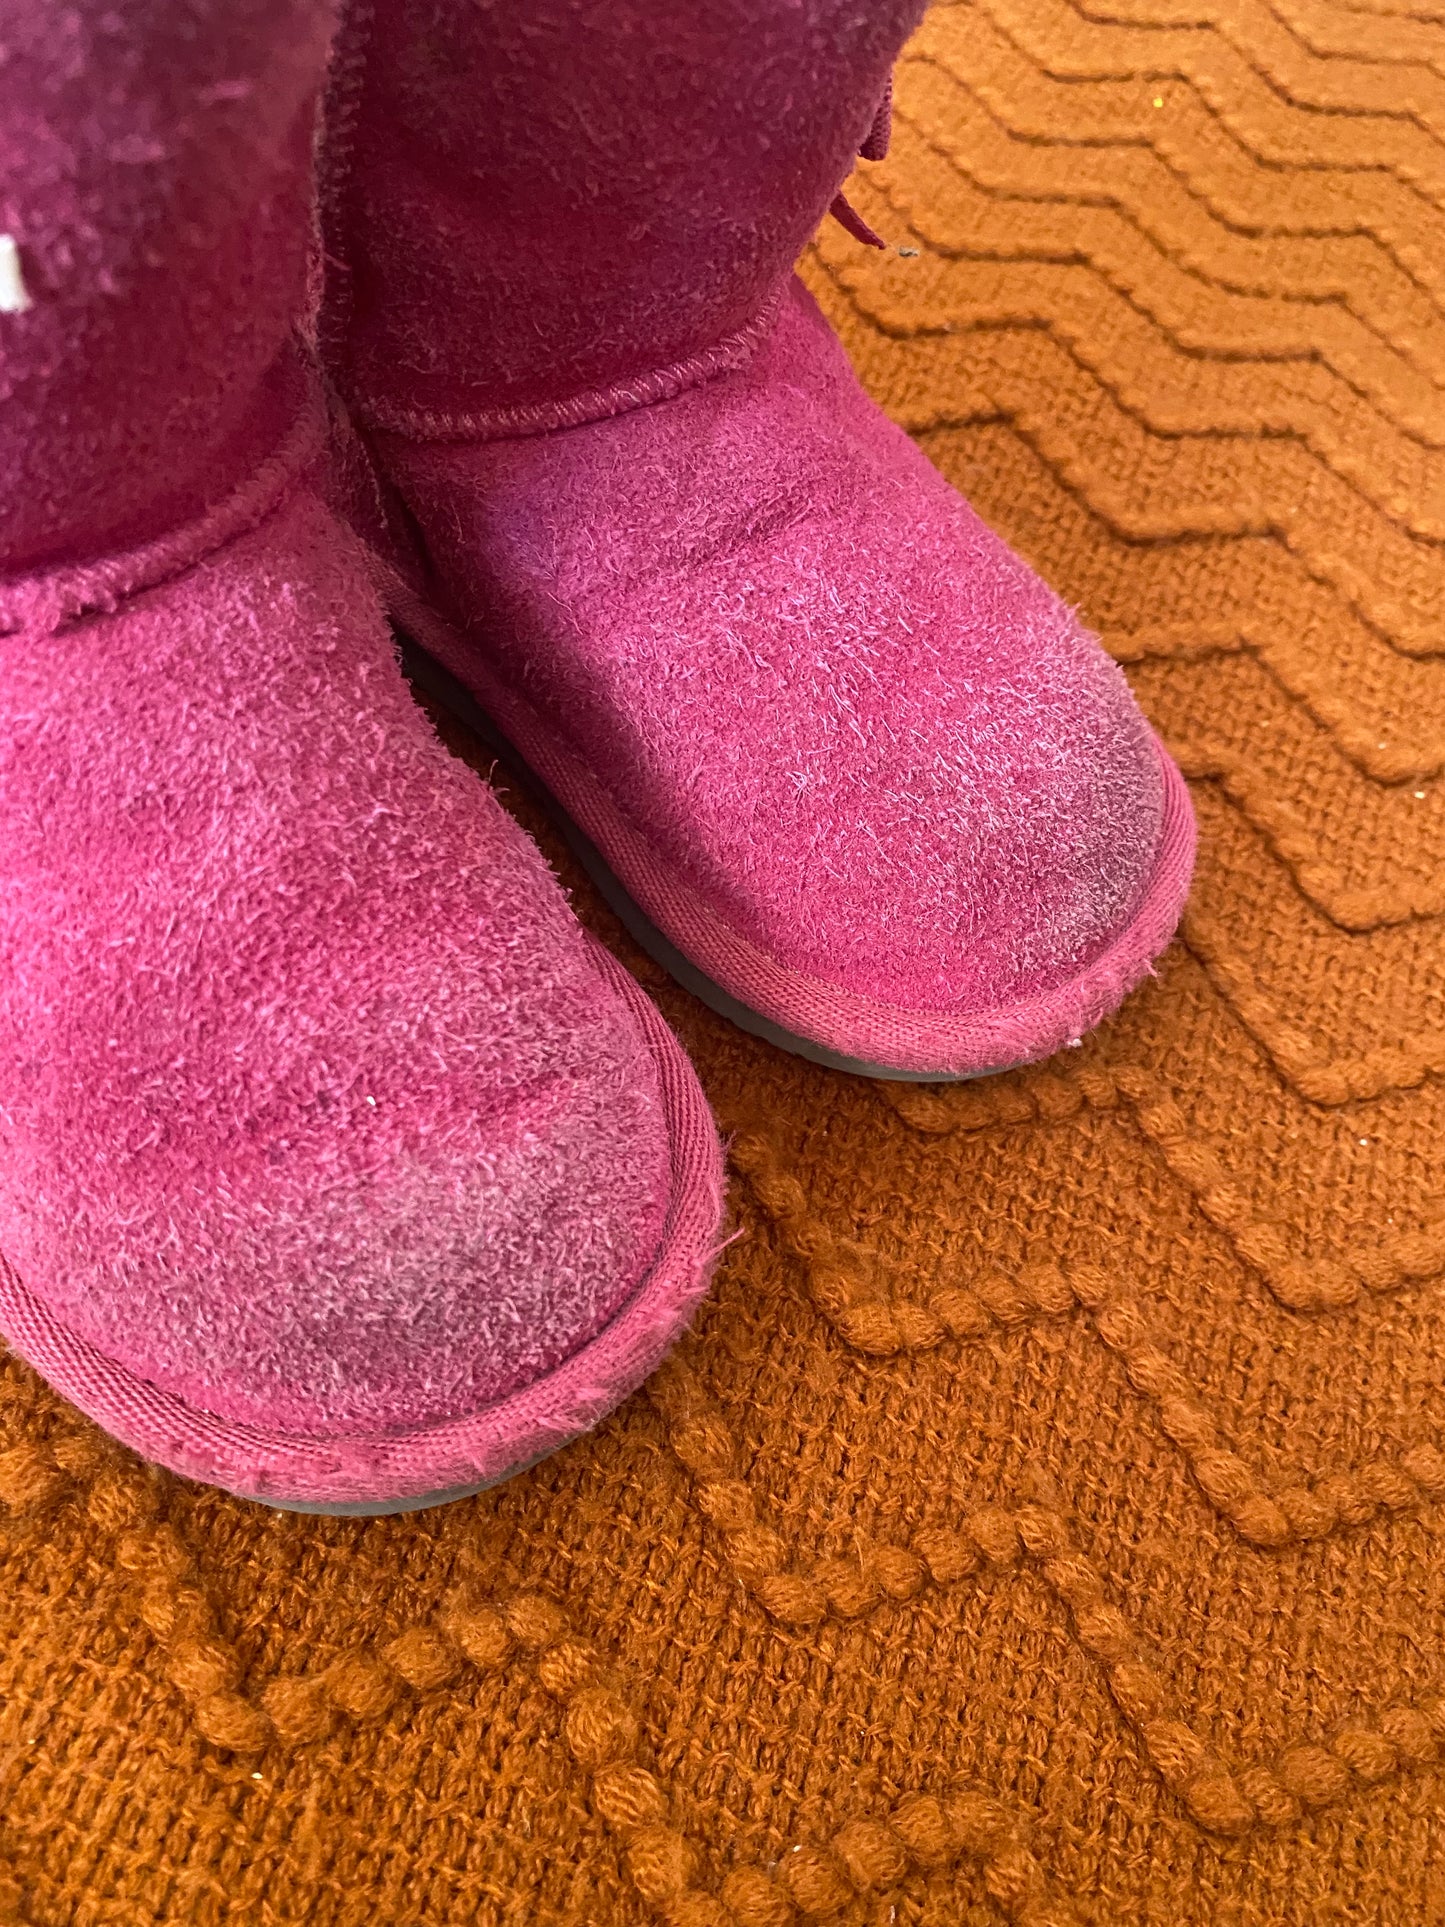 Girls Size 6 Koolaburra by Ugg Pink Boots